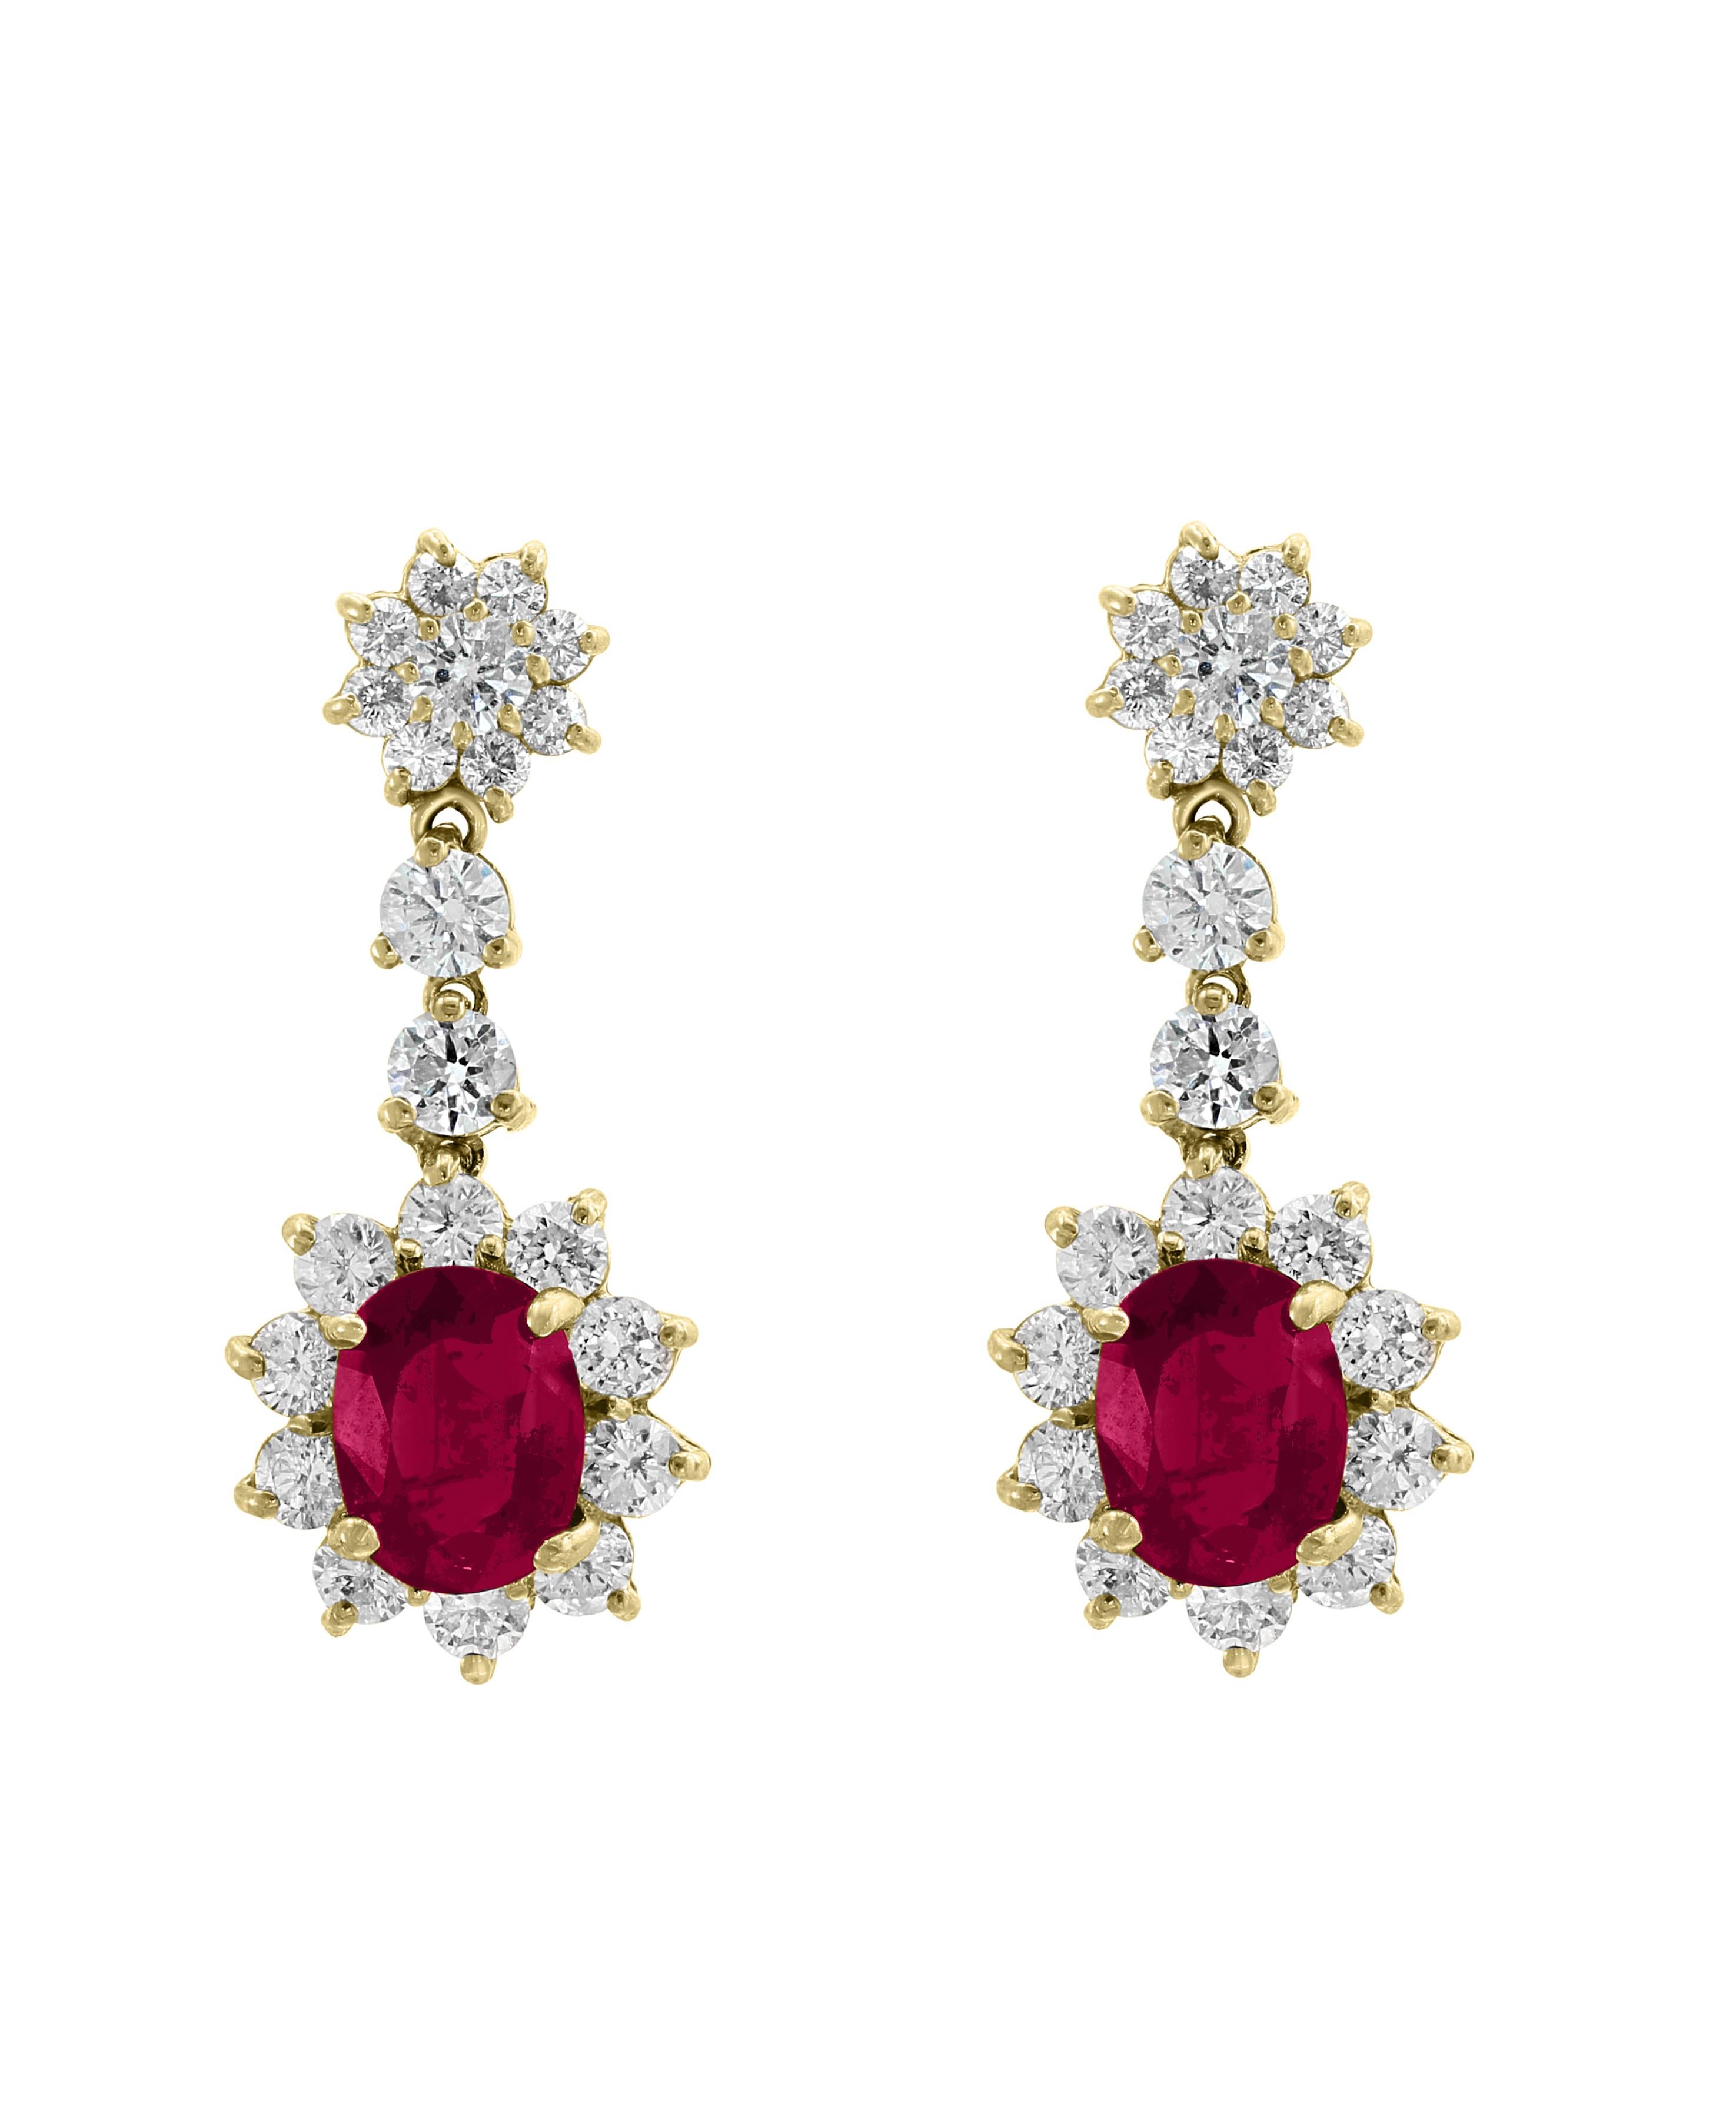 5.5 Carat Ruby and 5 Carat Diamond Hanging or Chandelier Earrings 18 Karat Gold 3